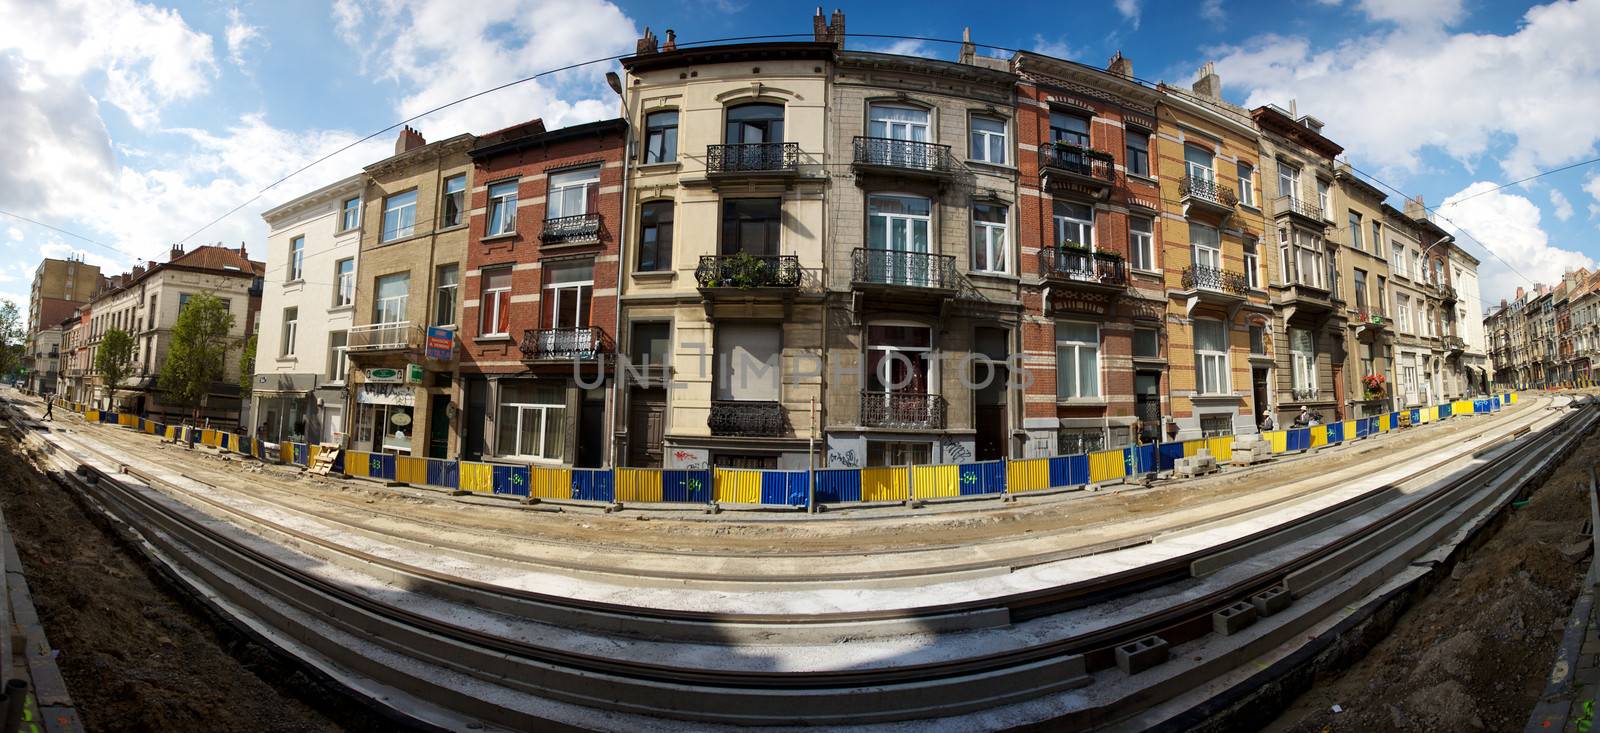 Rue de la Brasserie, during the restoration works of the tramway line in Ixelles, Brussels